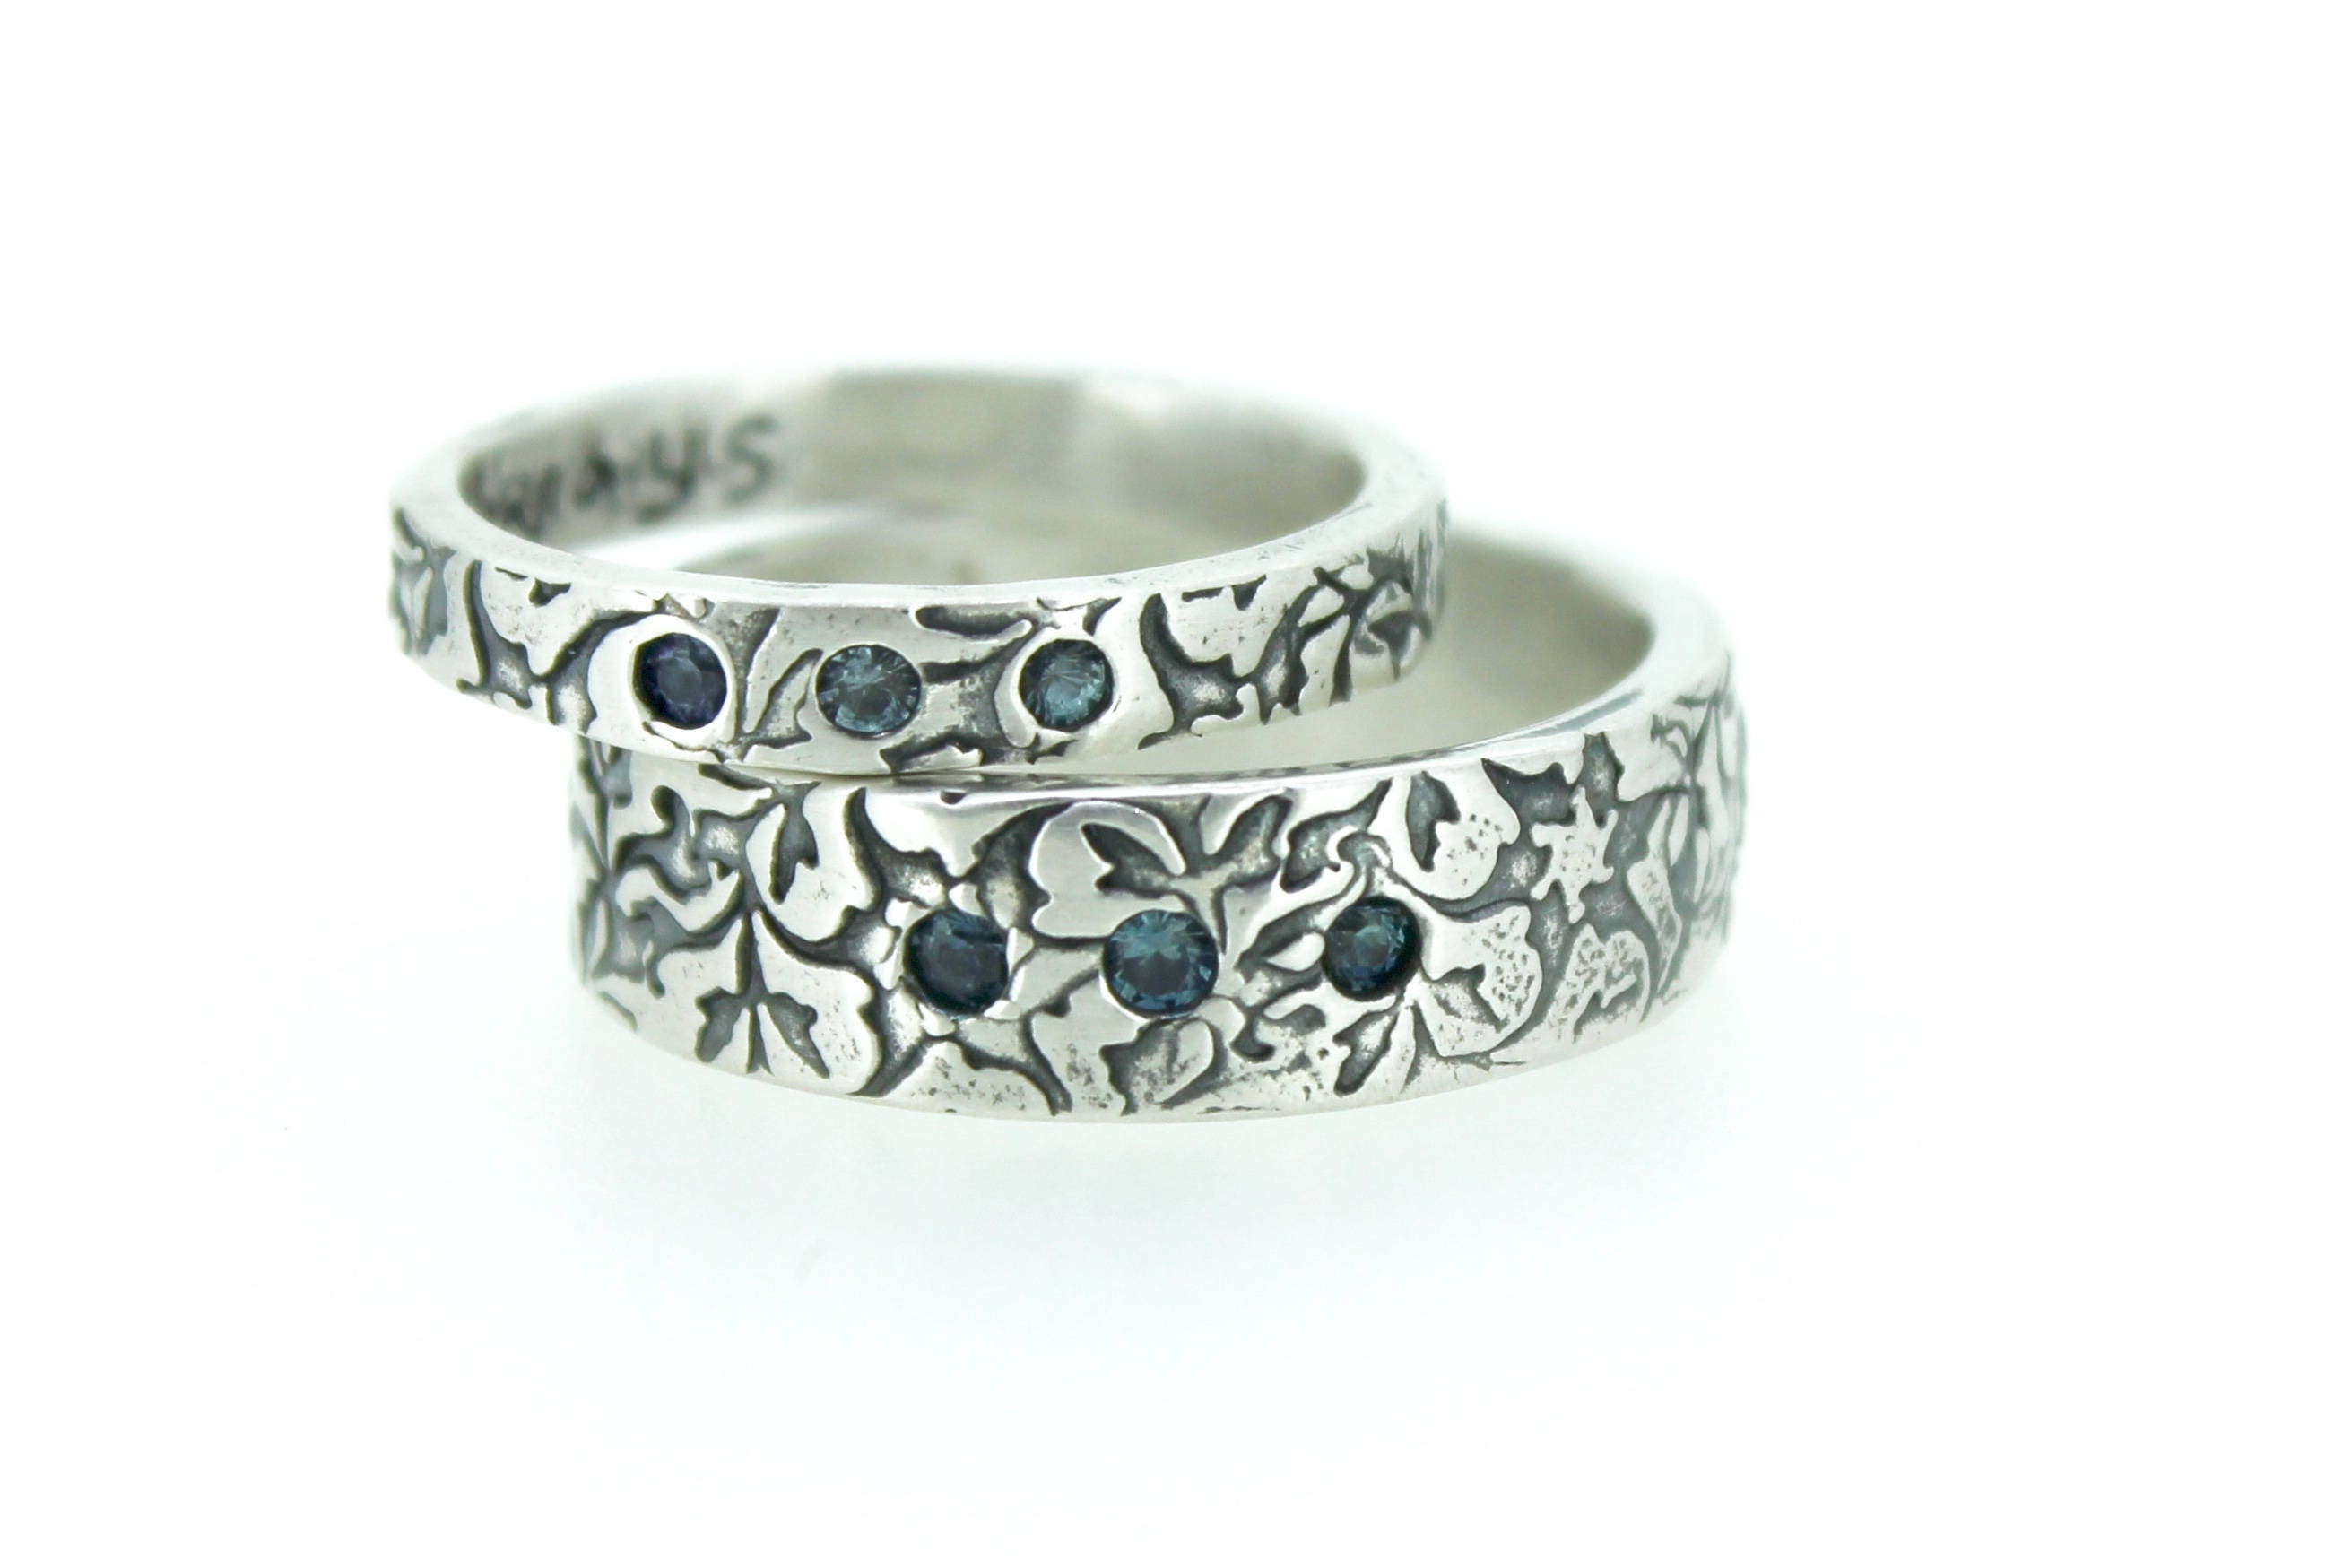  Wedding  band  ring  set with three fair  trade sapphires Etsy